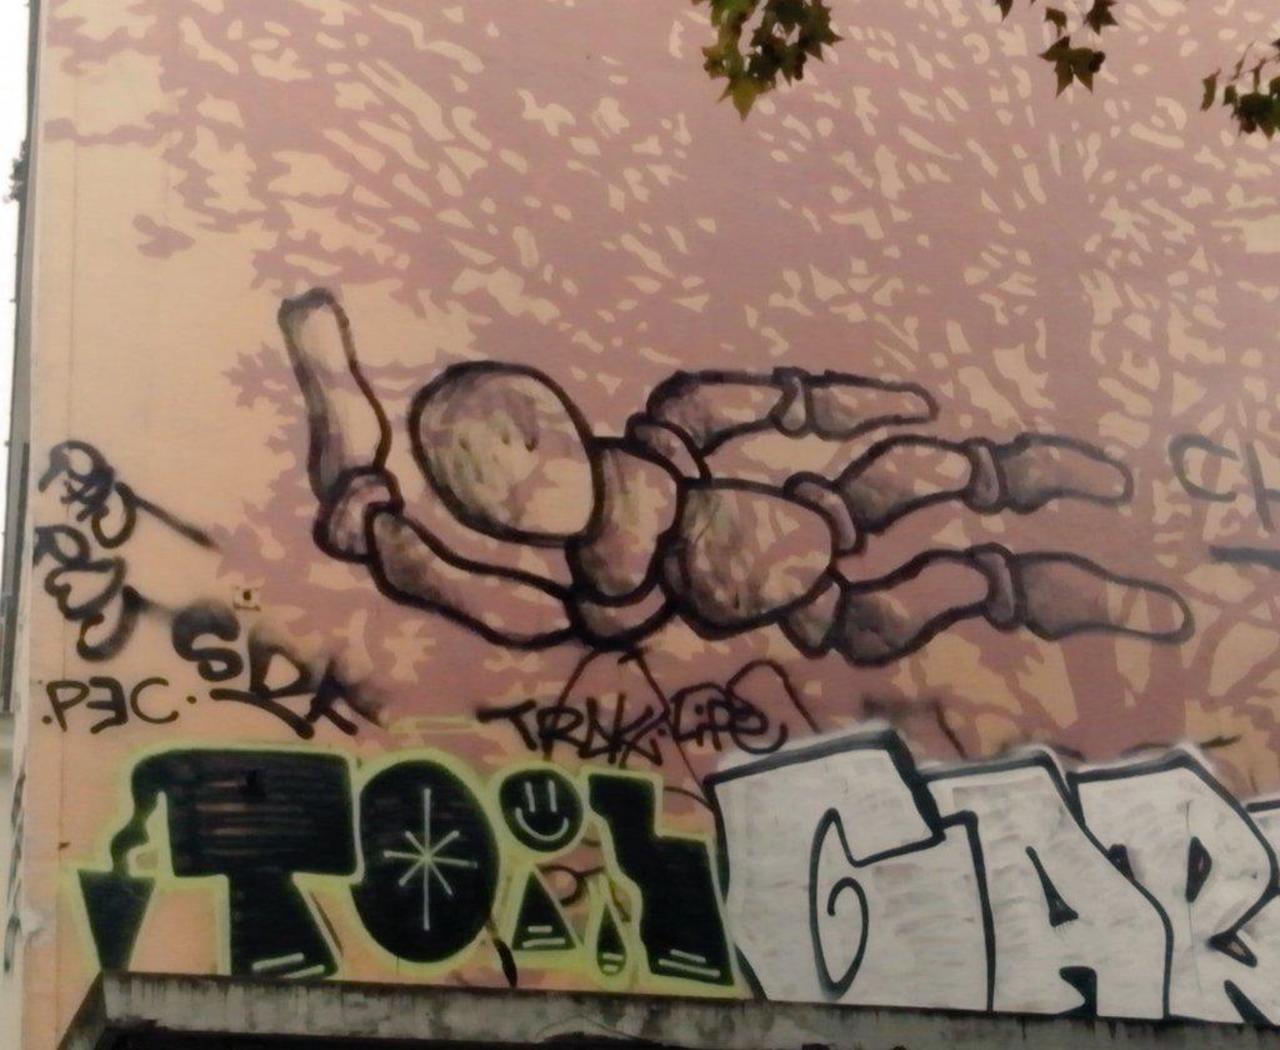 #streetart #urbanart #graffiti #painting #wall #mural #Paris #jaimeParis http://t.co/QU2OI1gKsP